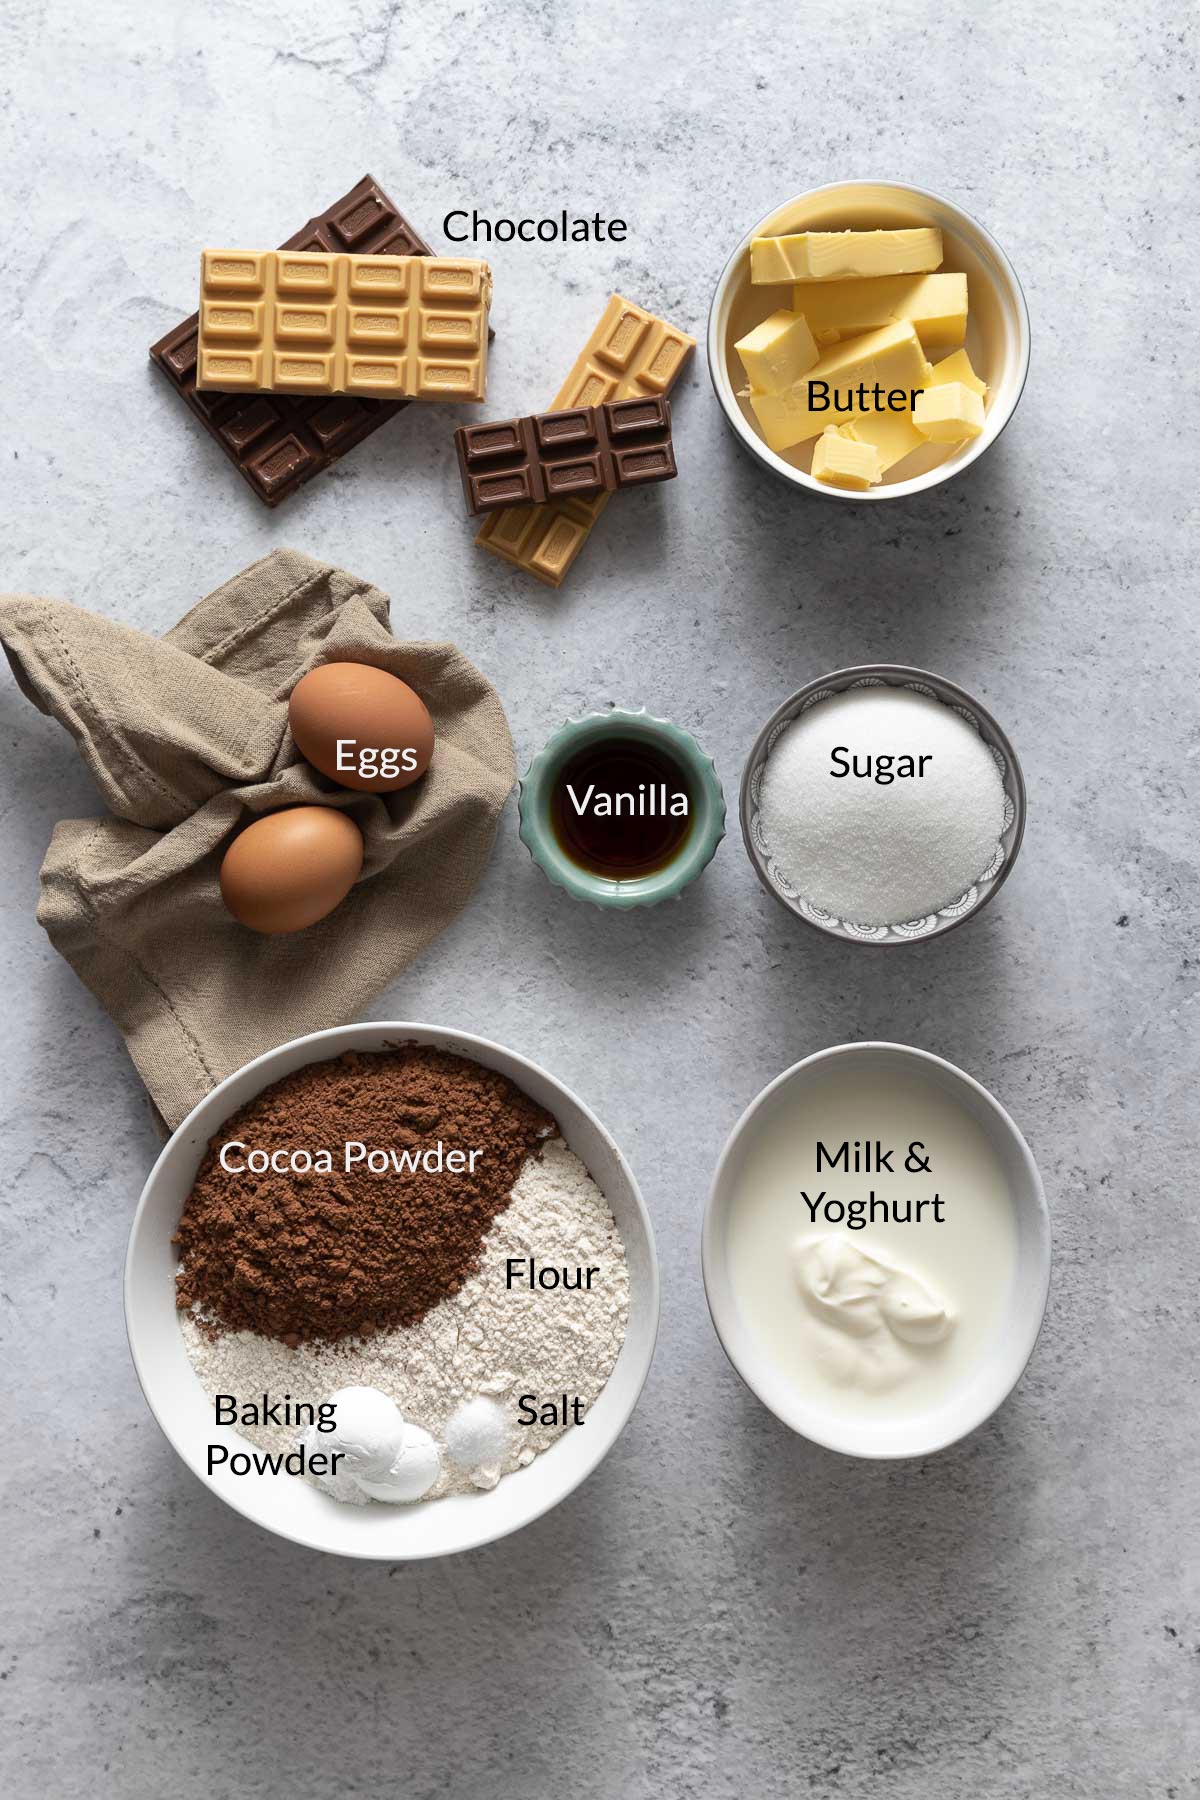 Triple Chocolate Muffins Ingredients.